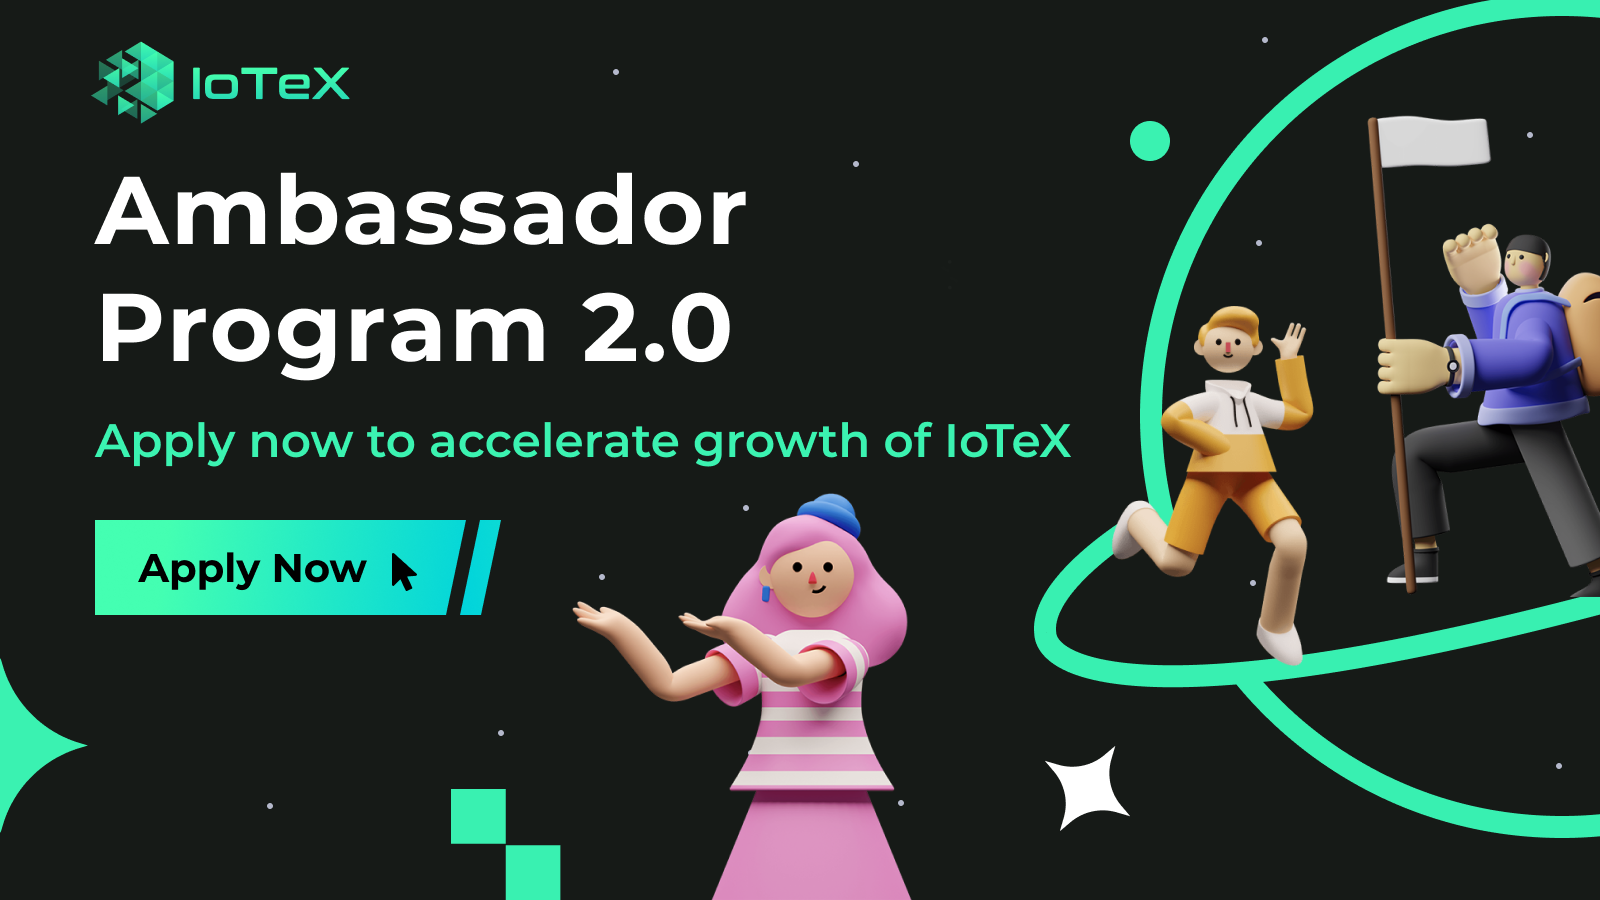 IoTeX Ambassador Program 2.0 - Applications Are Open